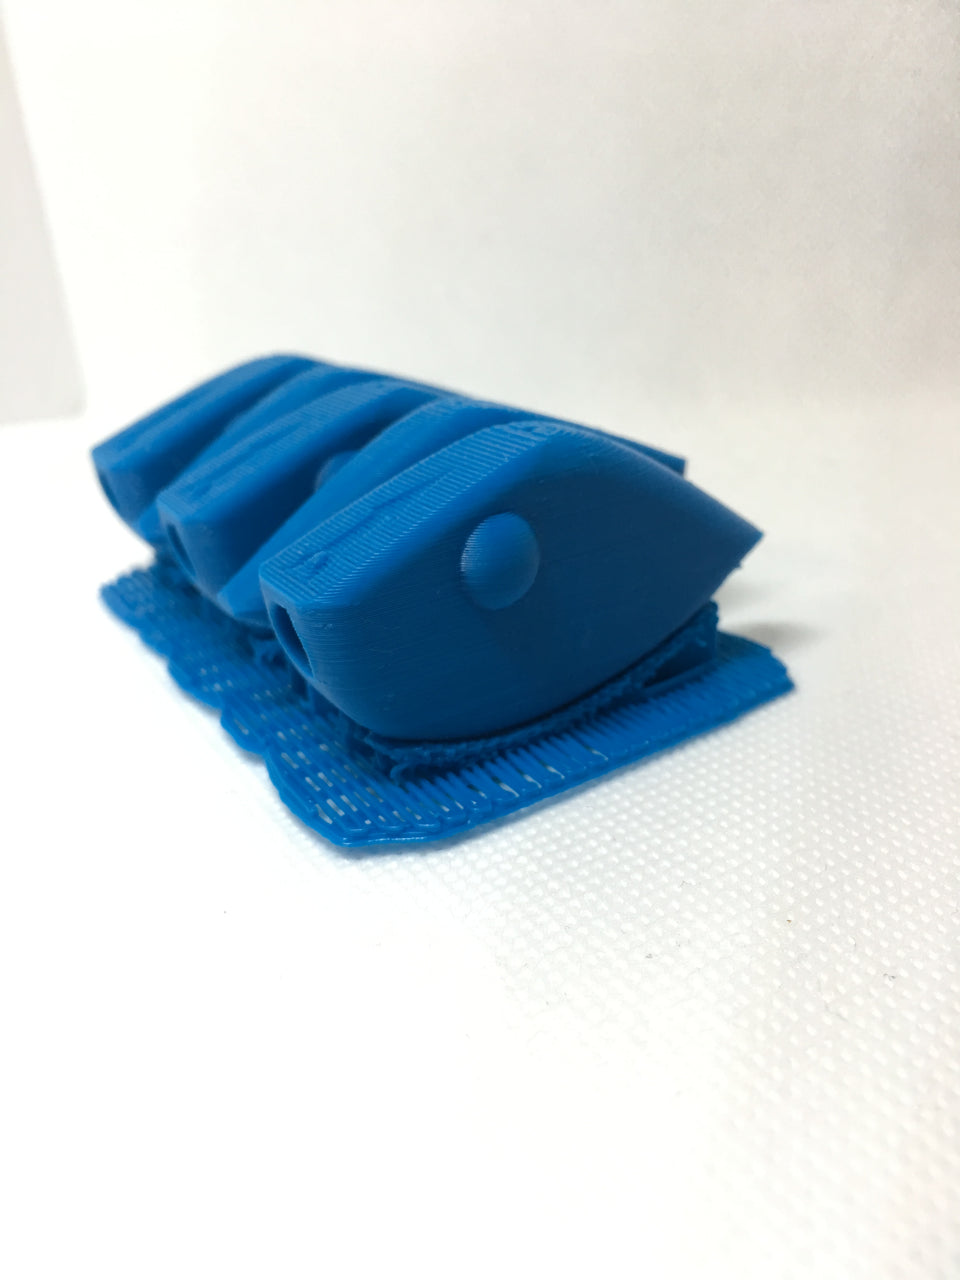 LIPLESS CRANKBAIT 2 INCH BLANK 3D PRINTED FRESH OFF THE PRINTER (BLUE)